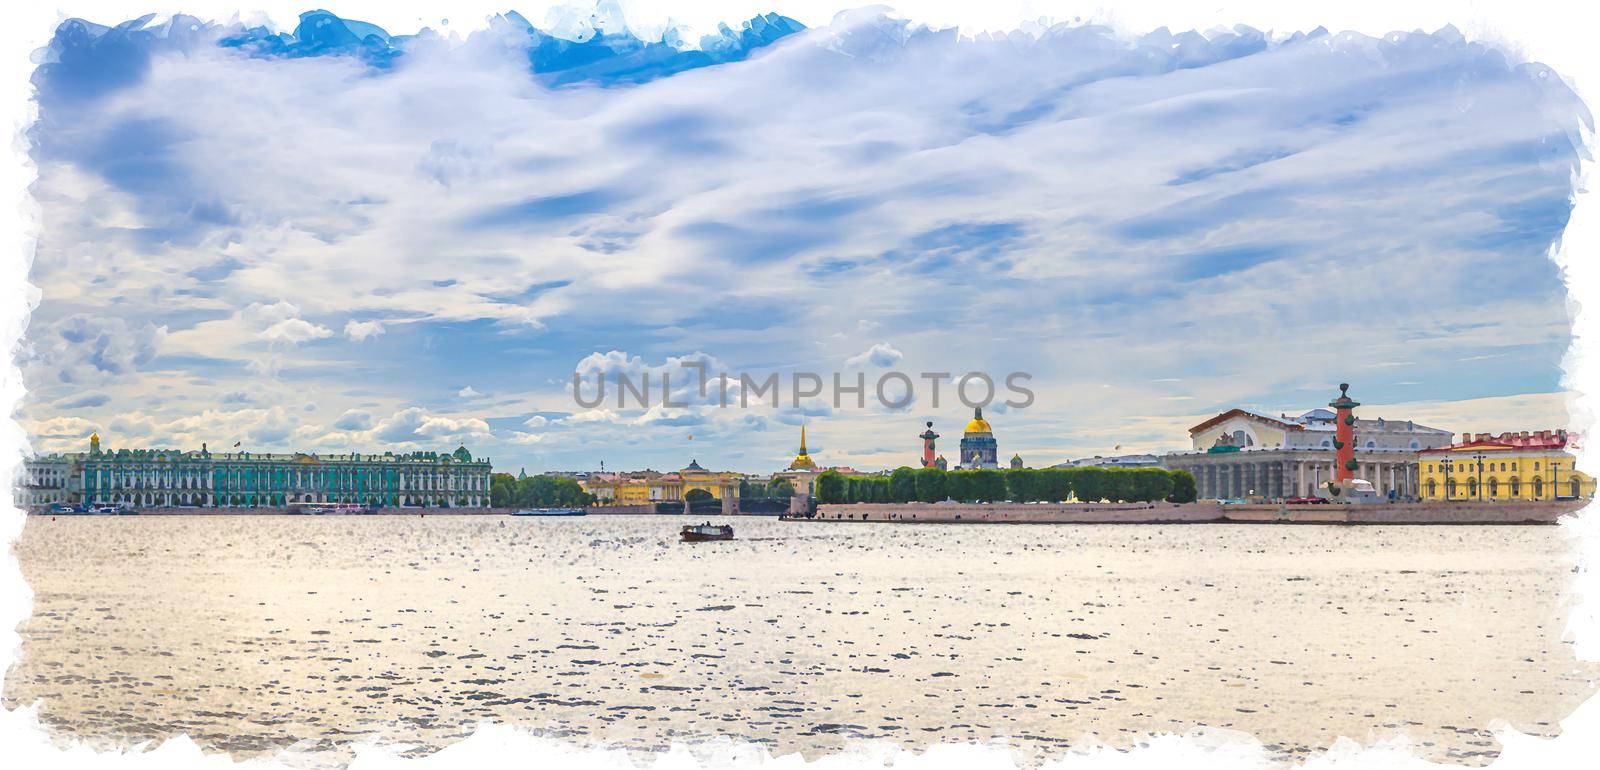 Watercolor drawing of Panorama of Saint Petersburg with Winter Palace, State Hermitage Museum, Palace Bridge across Neva river by Aliaksandr_Antanovich